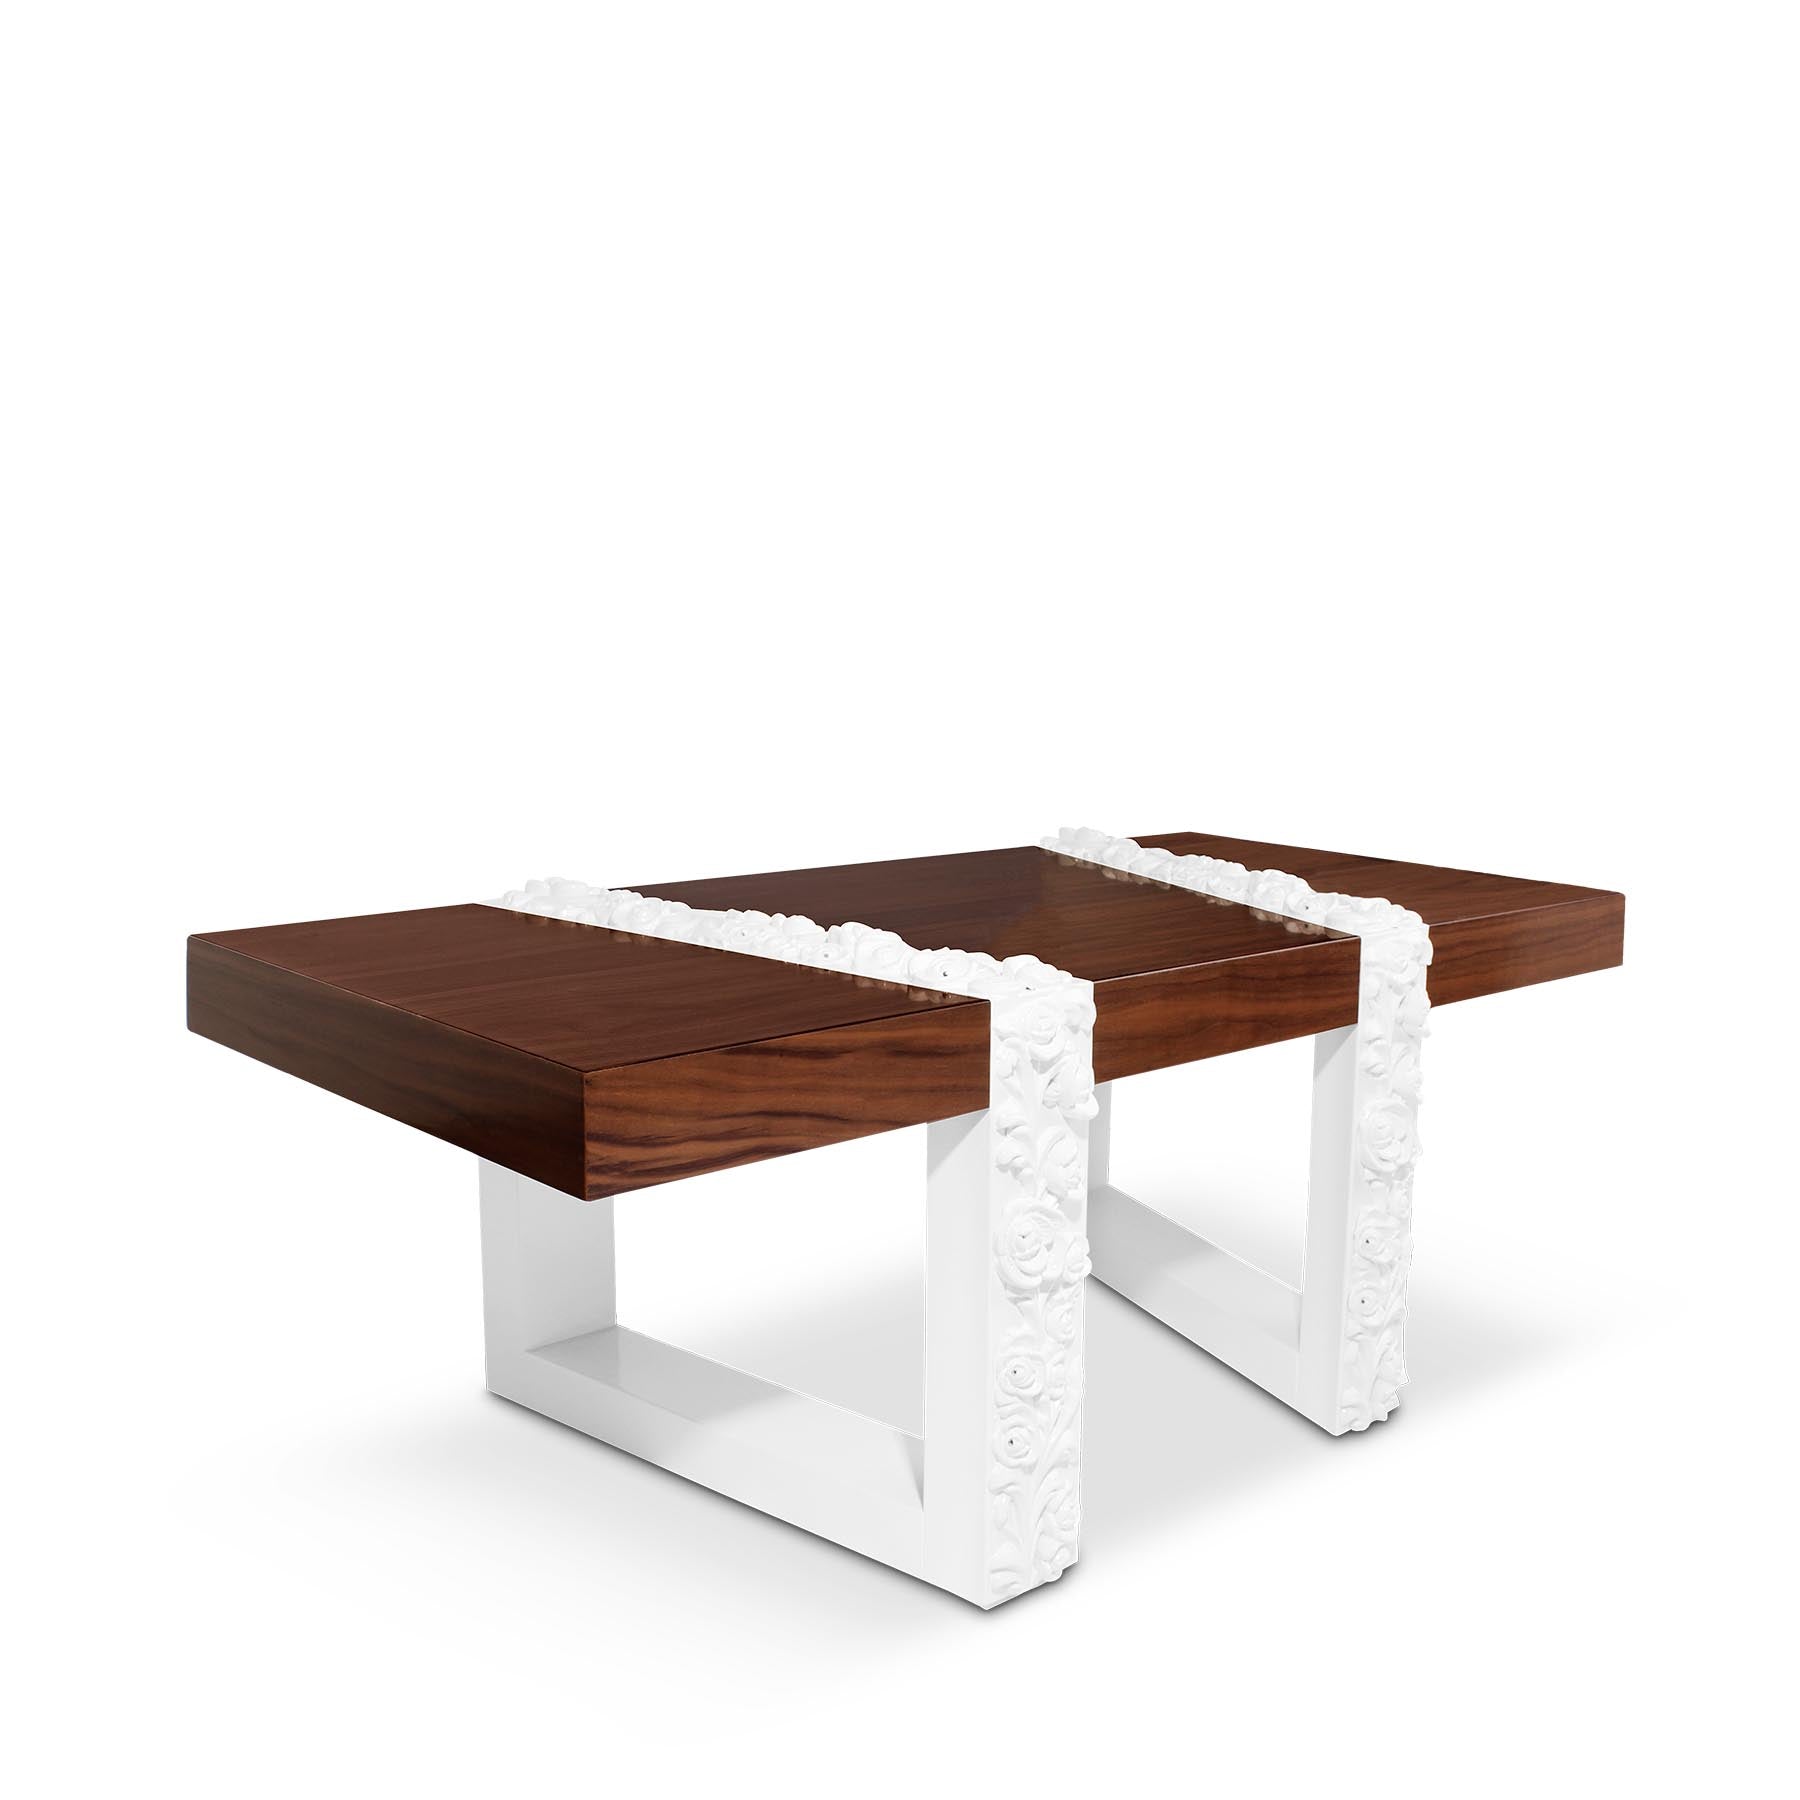 FIGEN - COFFEE TABLE | Modern Furniture + Decor